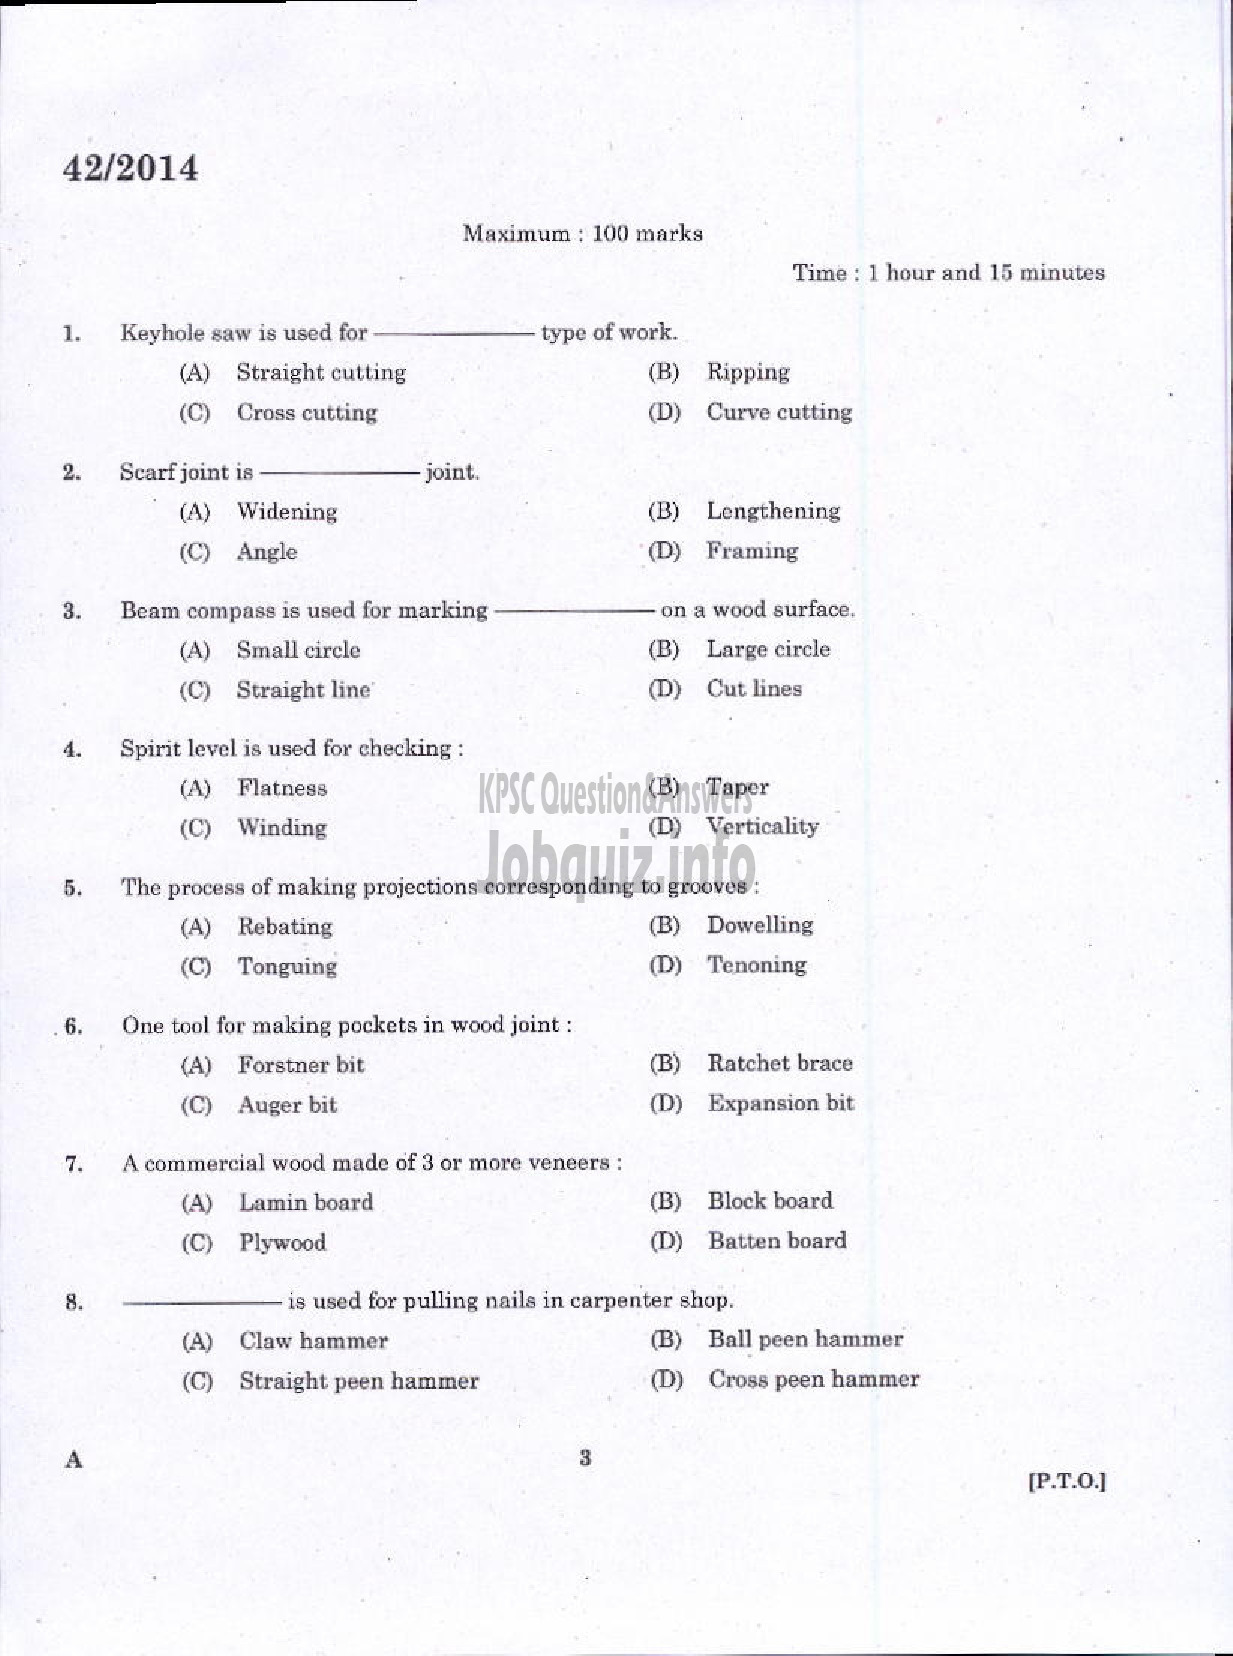 Kerala PSC Question Paper - JUNIOR INSTRUCTOR CARPENTER INDUSTRIAL TRAINING-1